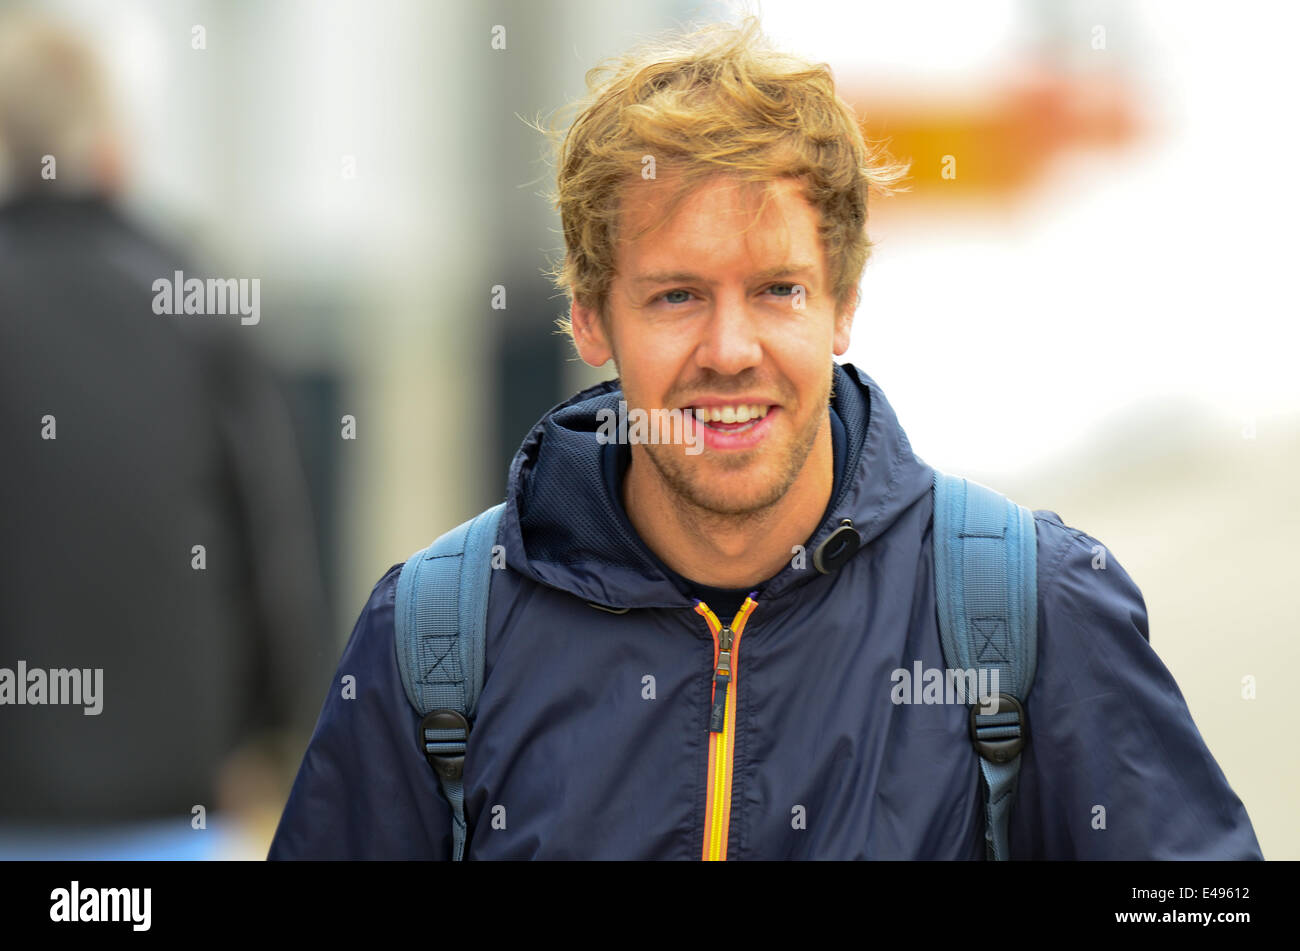 Sebastian Vettel, Red Bull Racing Formel1 Fahrer. Britische Formel 1 Grand Prix, Silverstone, Großbritannien Stockfoto